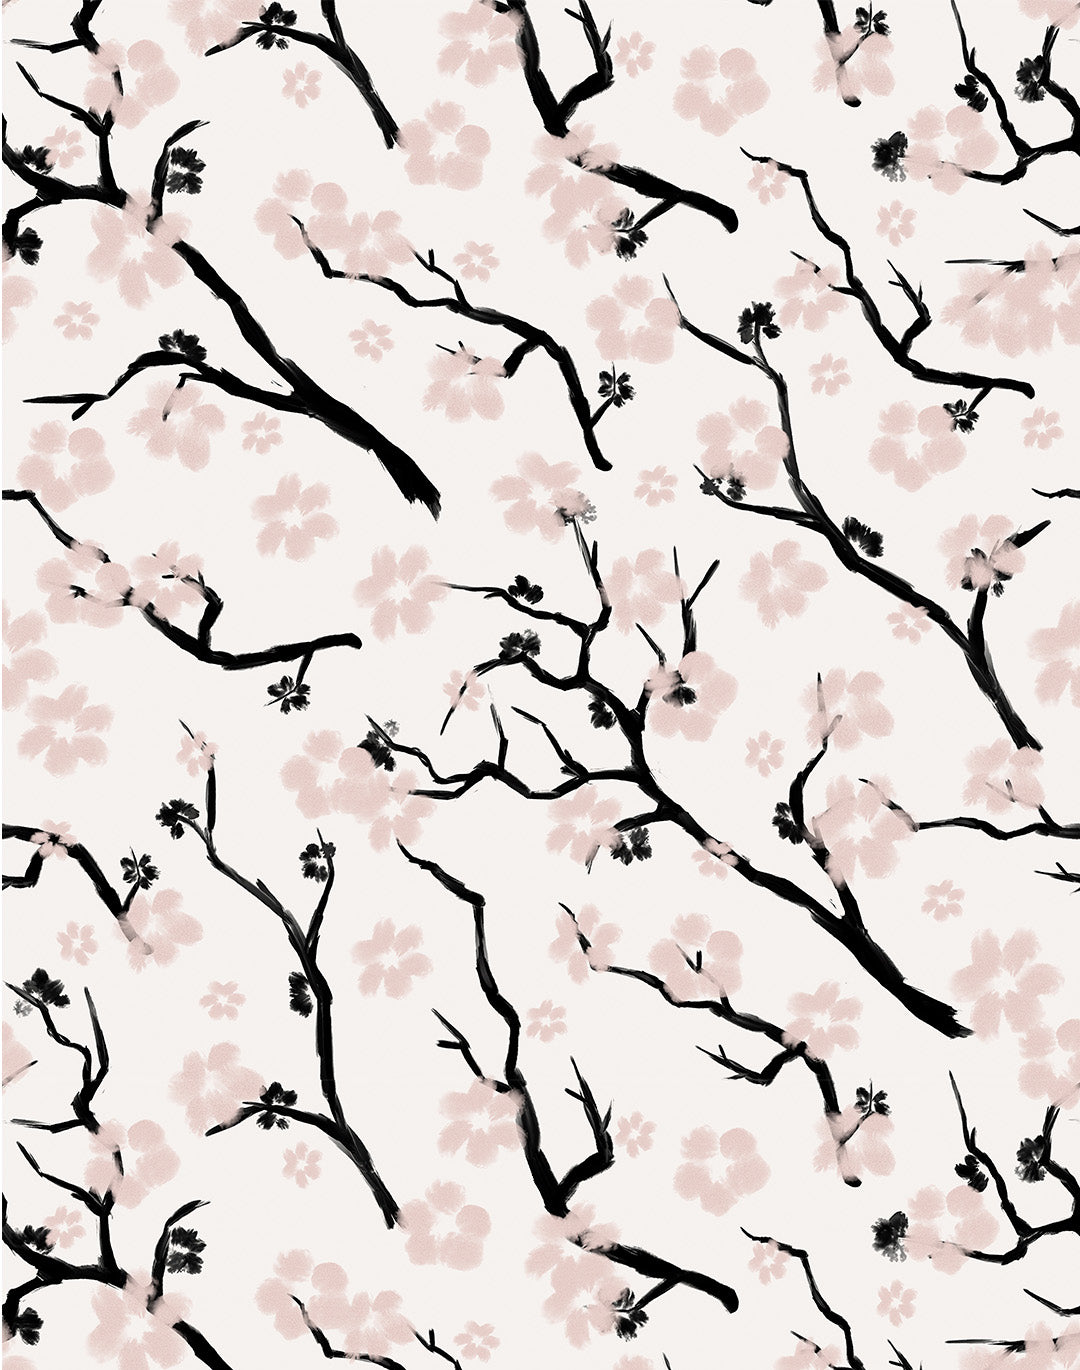 Sakura - Cherry Blossom Patterned Wallpaper